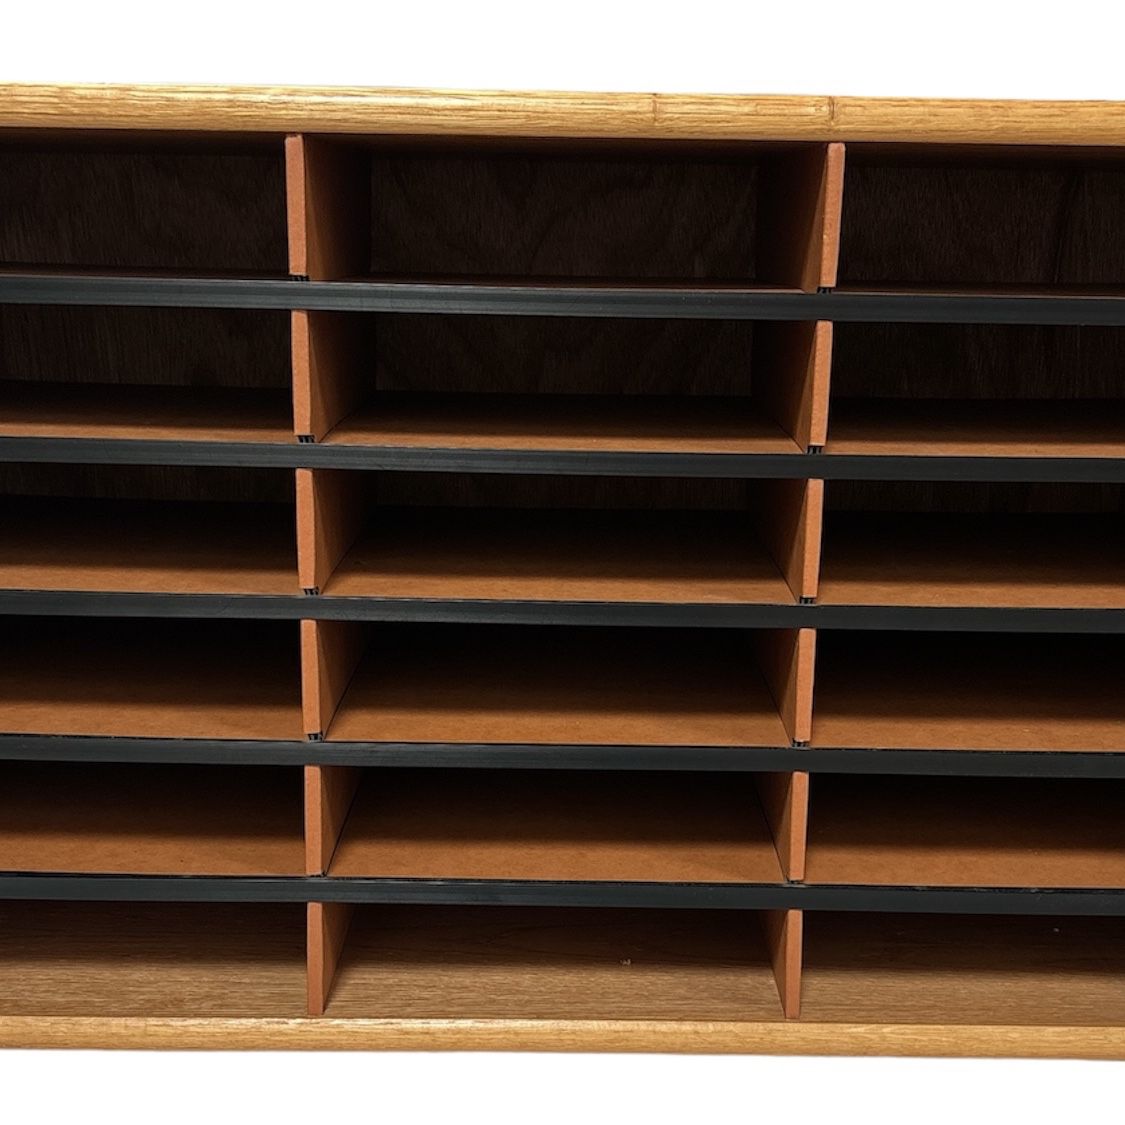 Wood Compartment Literature Organizer Cabinet